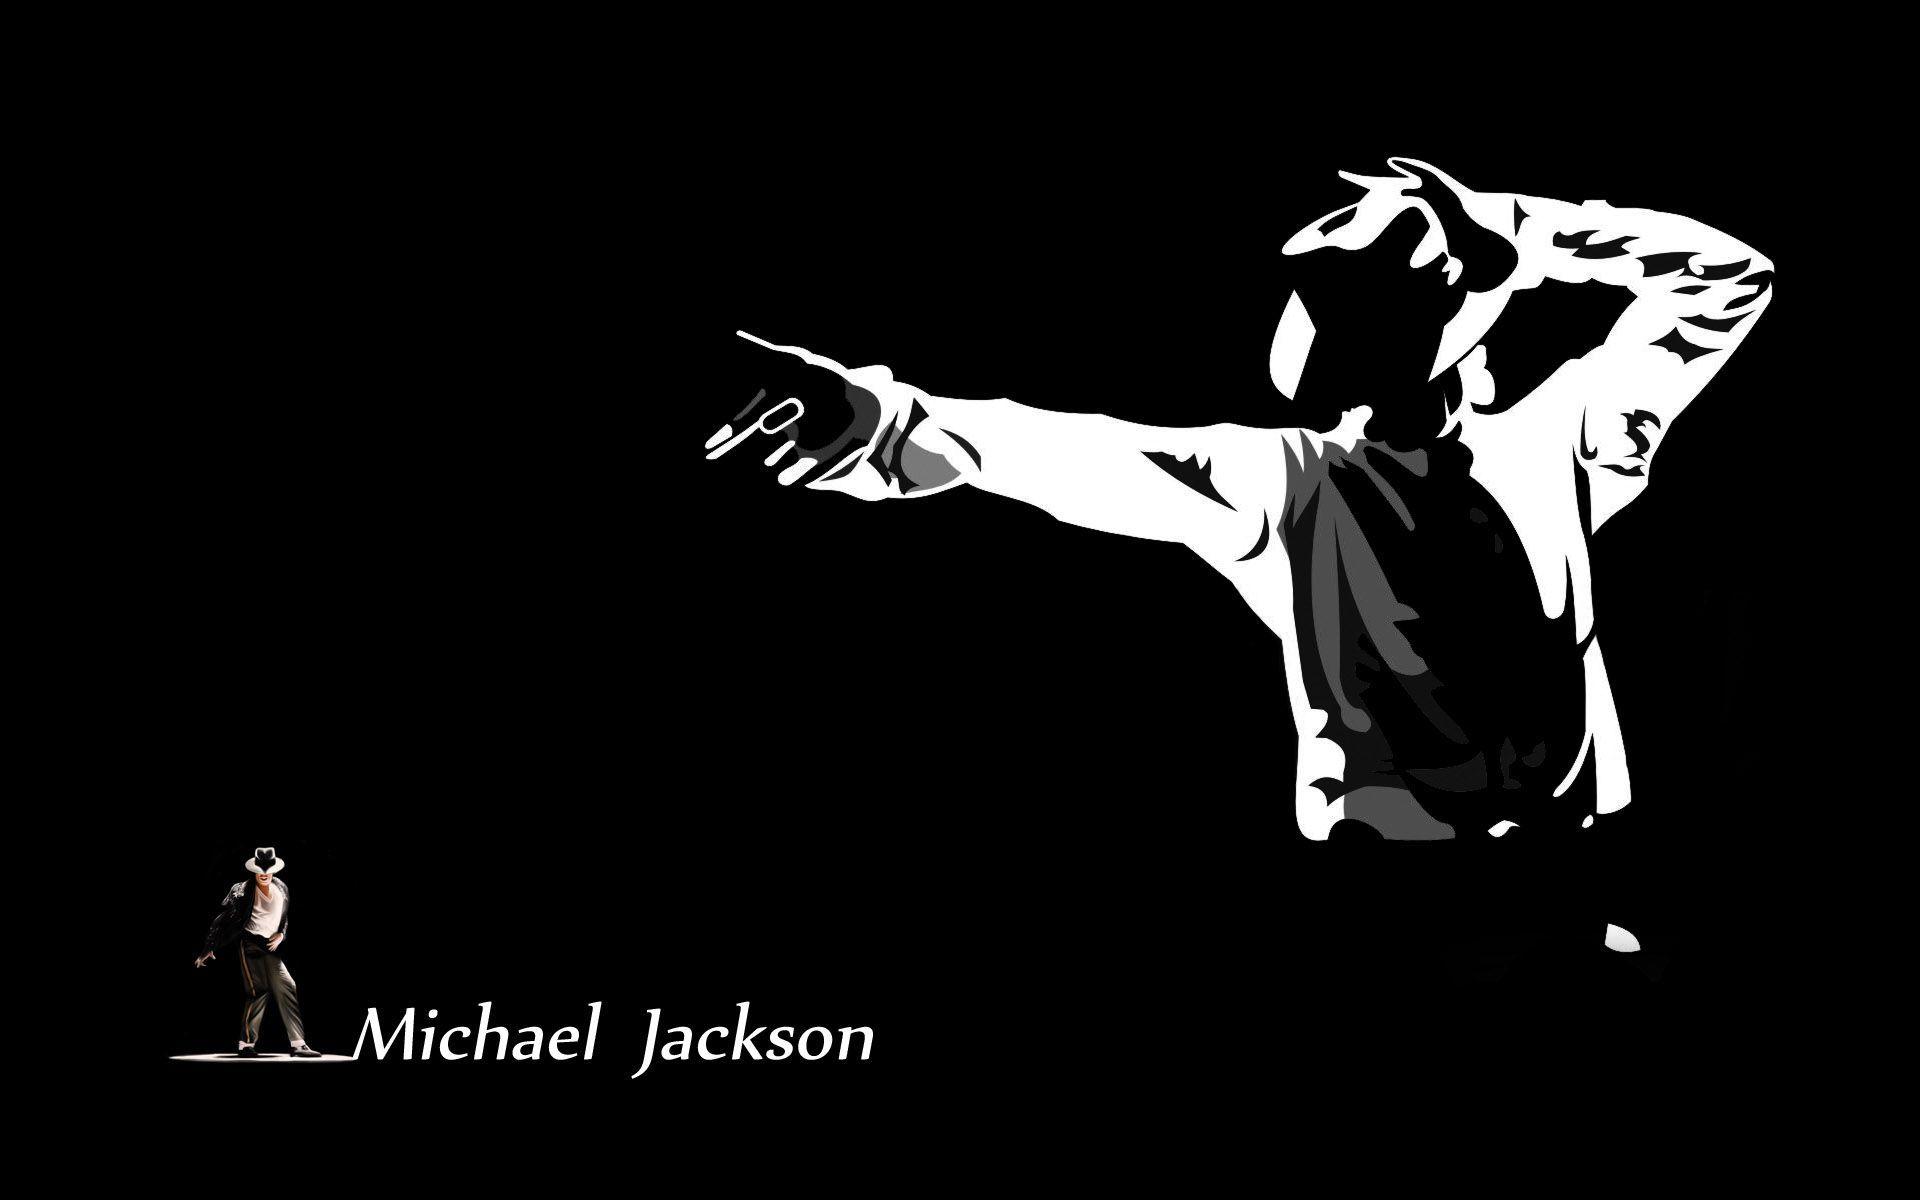 Michael Jackson wallpaper, download free wallpaper